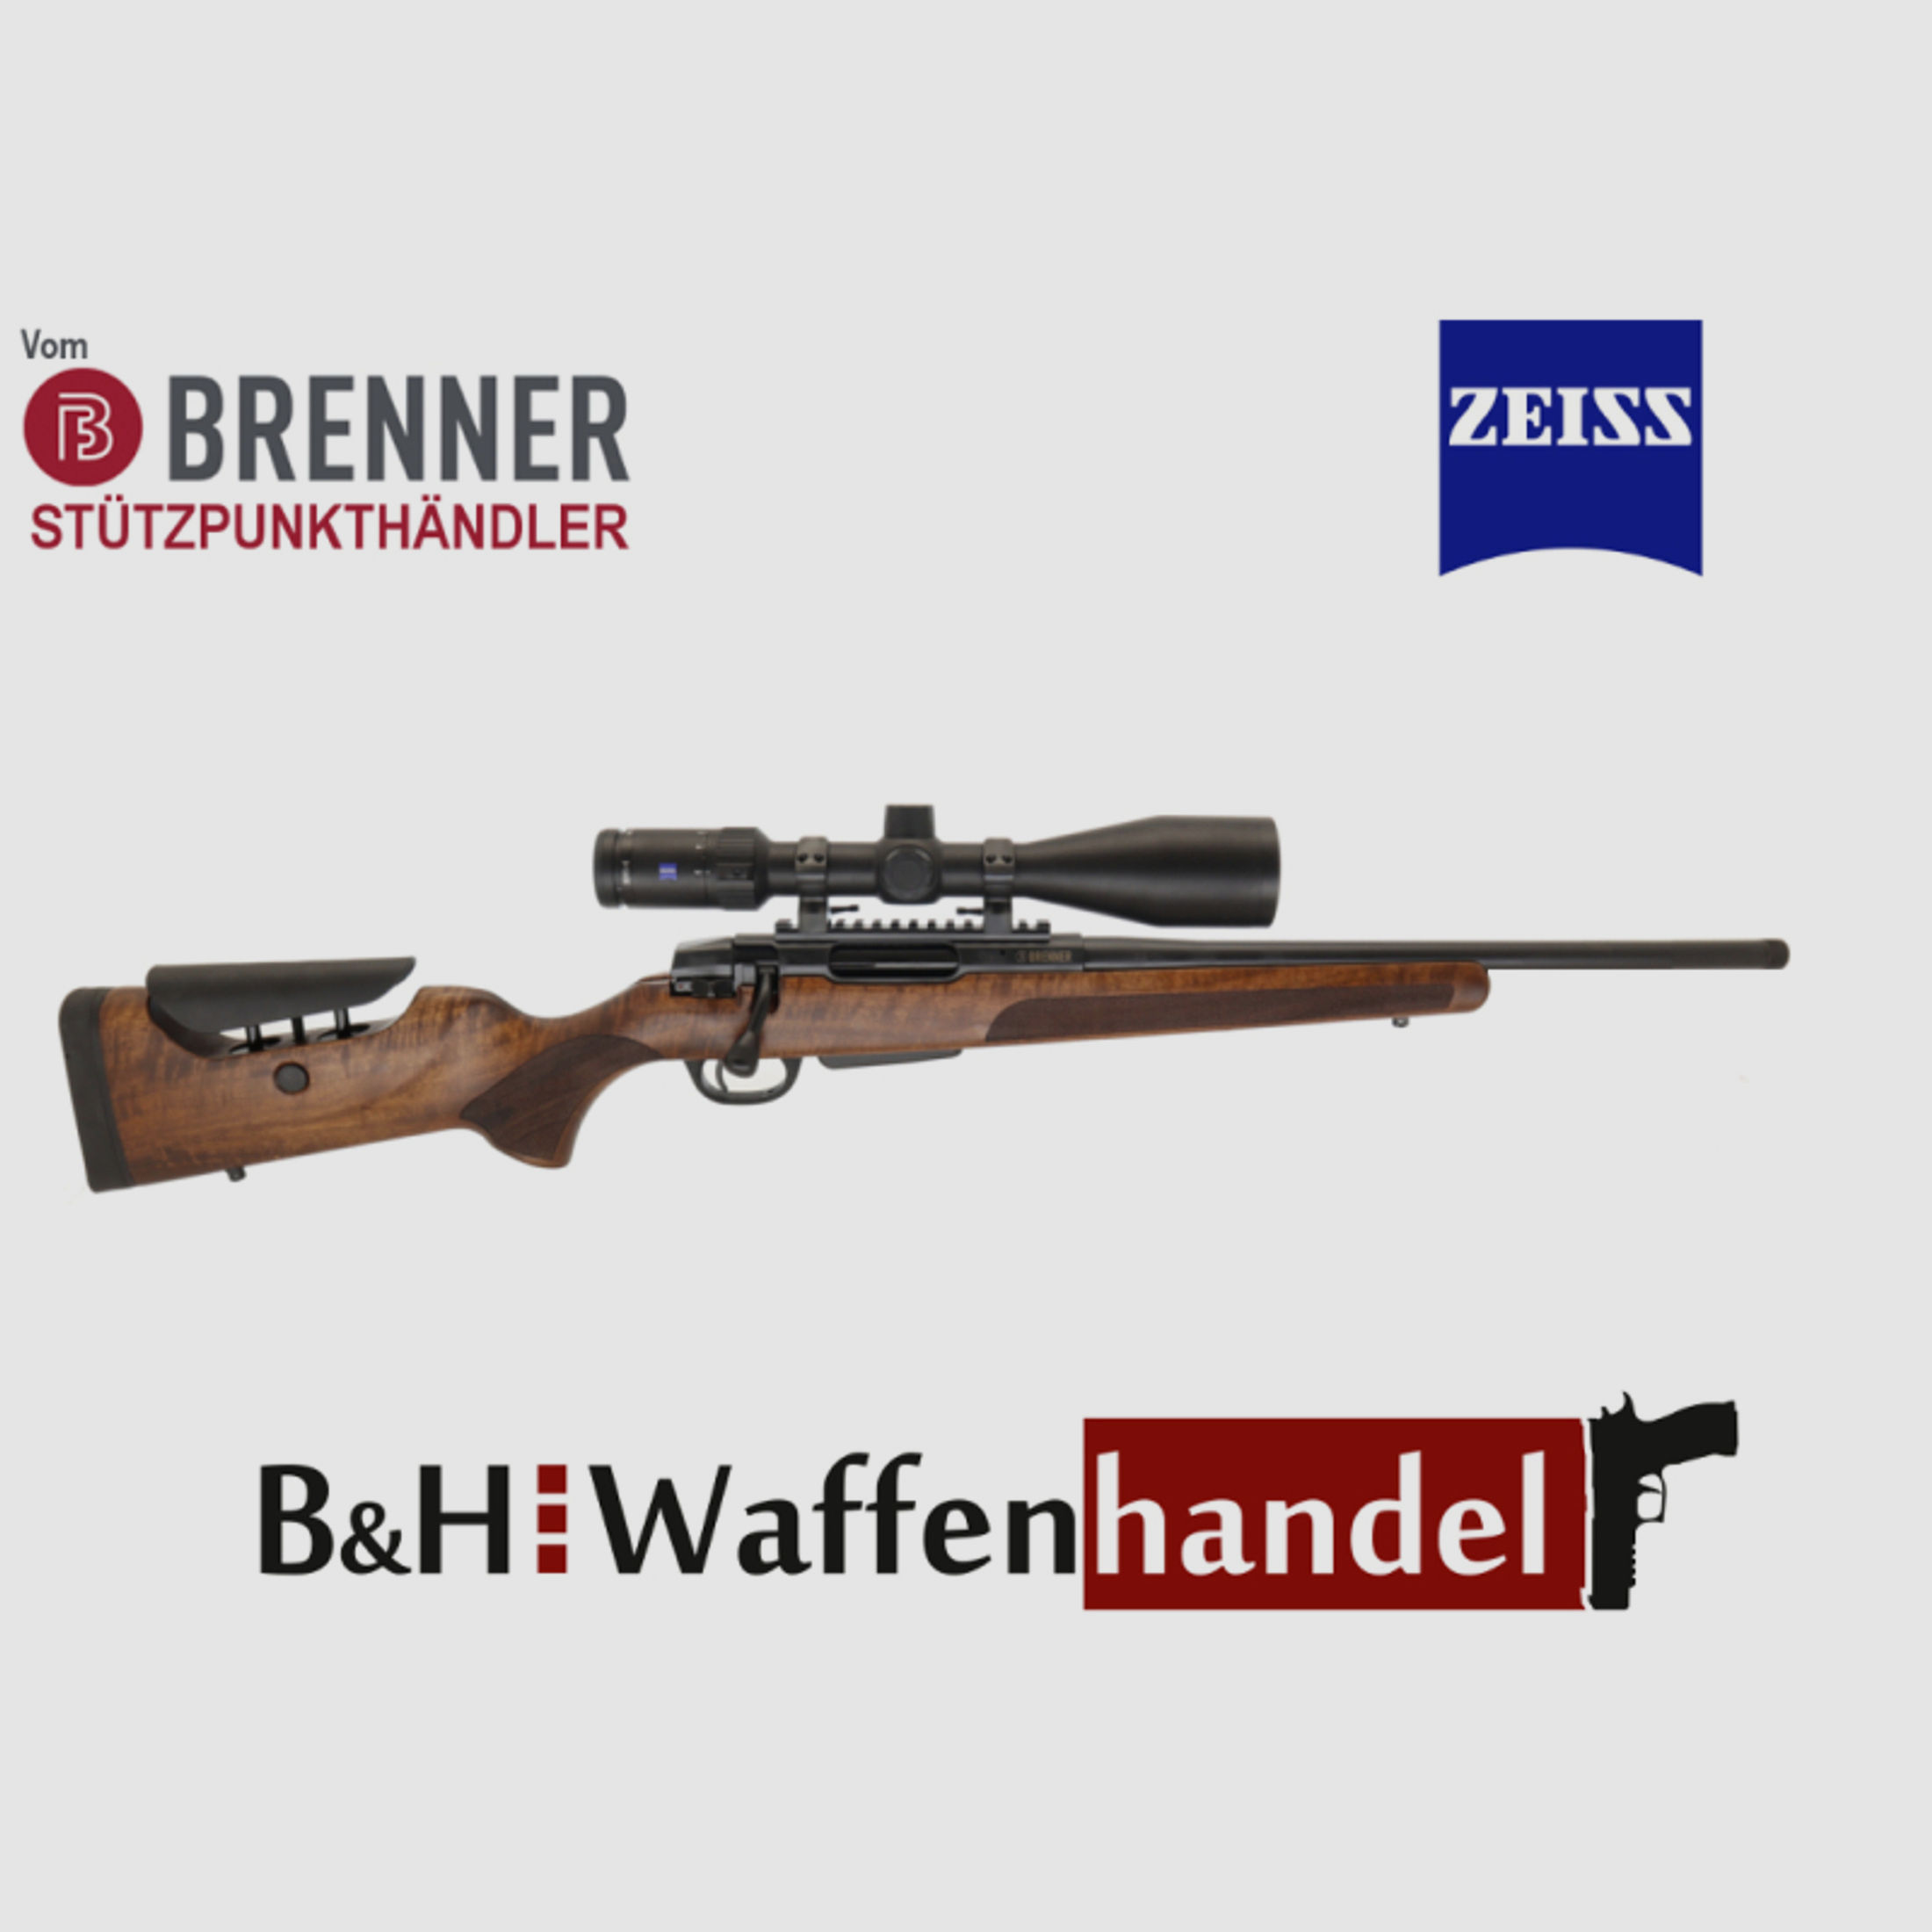 Neu: Brenner BR20 L.E. (verst. Schaftrücken) Komplettset Zeiss 3-12x56 Jagd Büchse Ratenkauf möglich